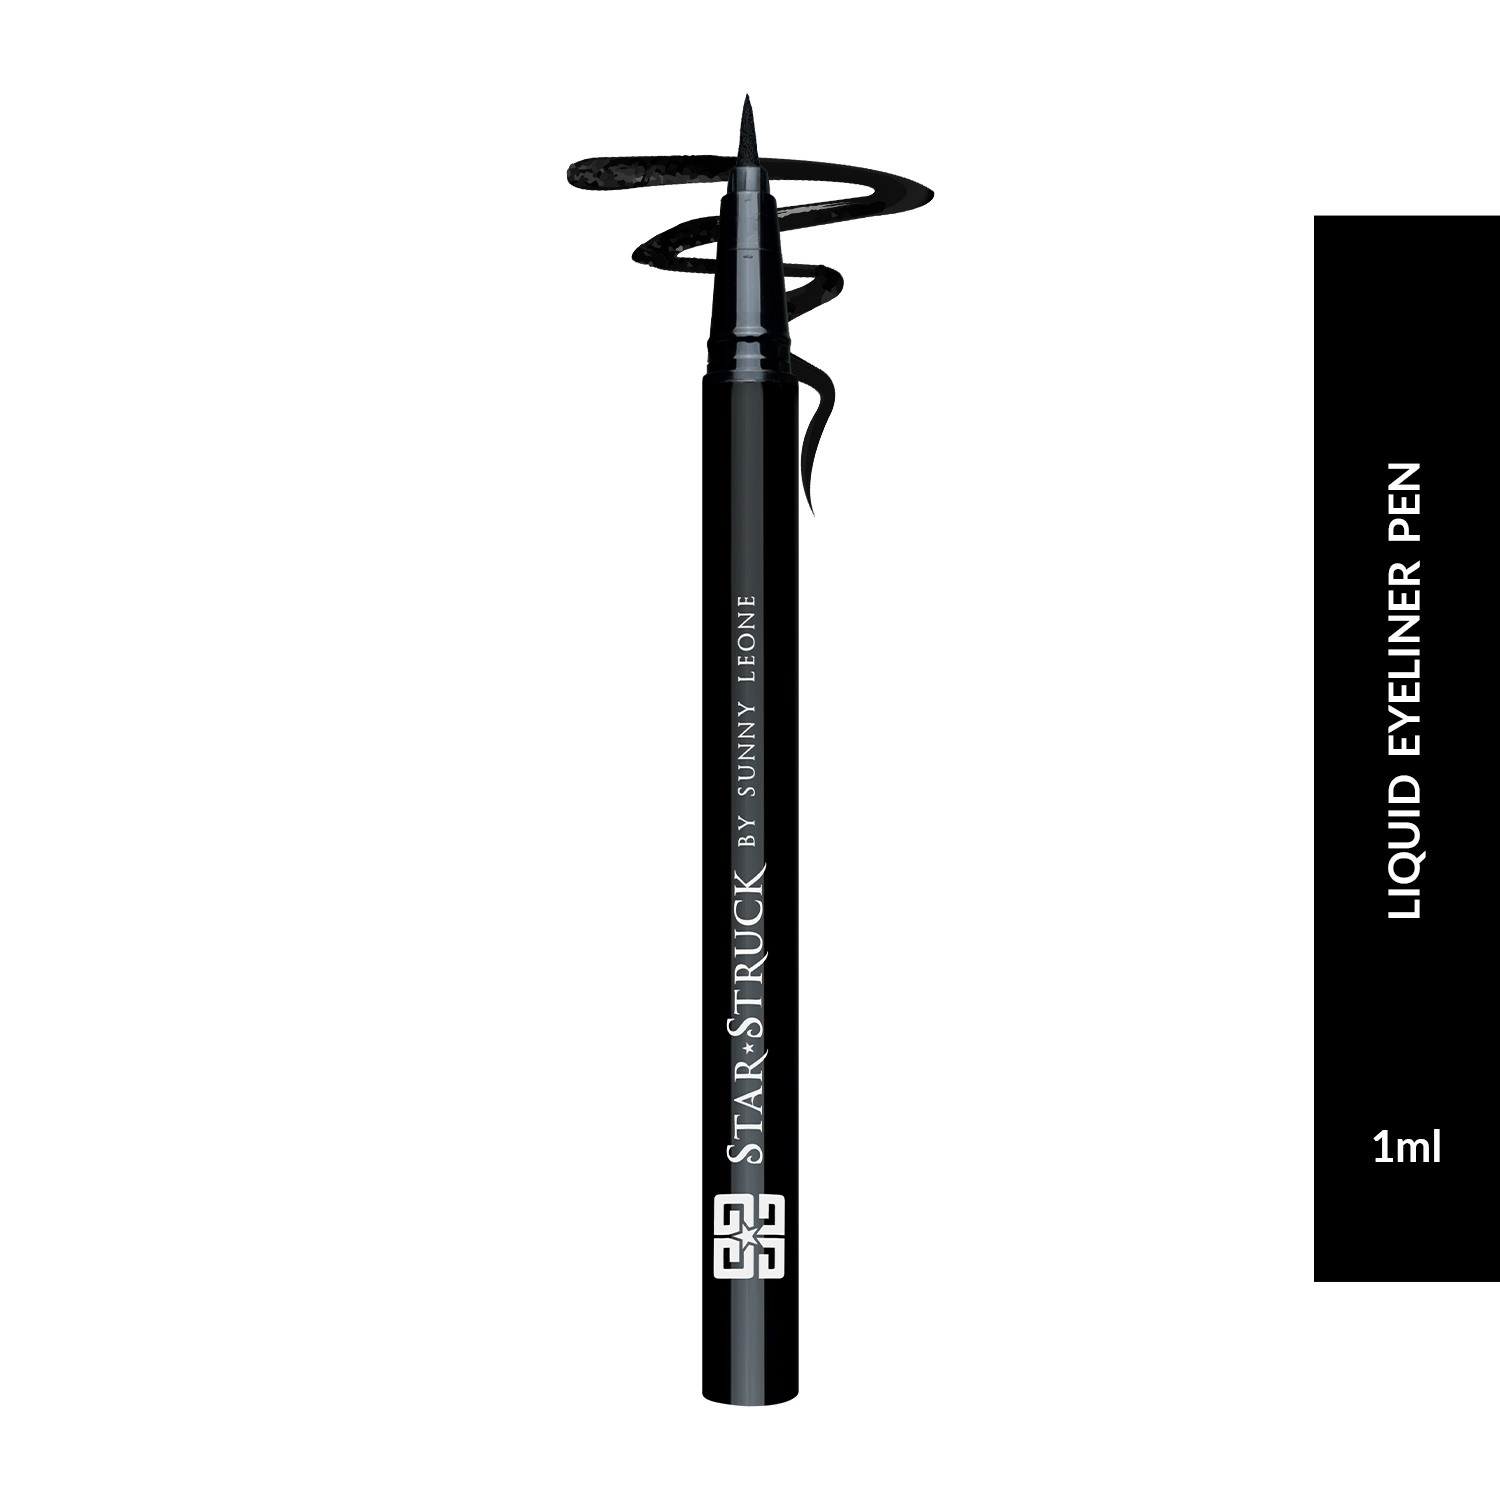 Star Struck by Sunny Leone | Star Struck by Sunny Leone Liquid Eyeliner Pen - Black (1ml)